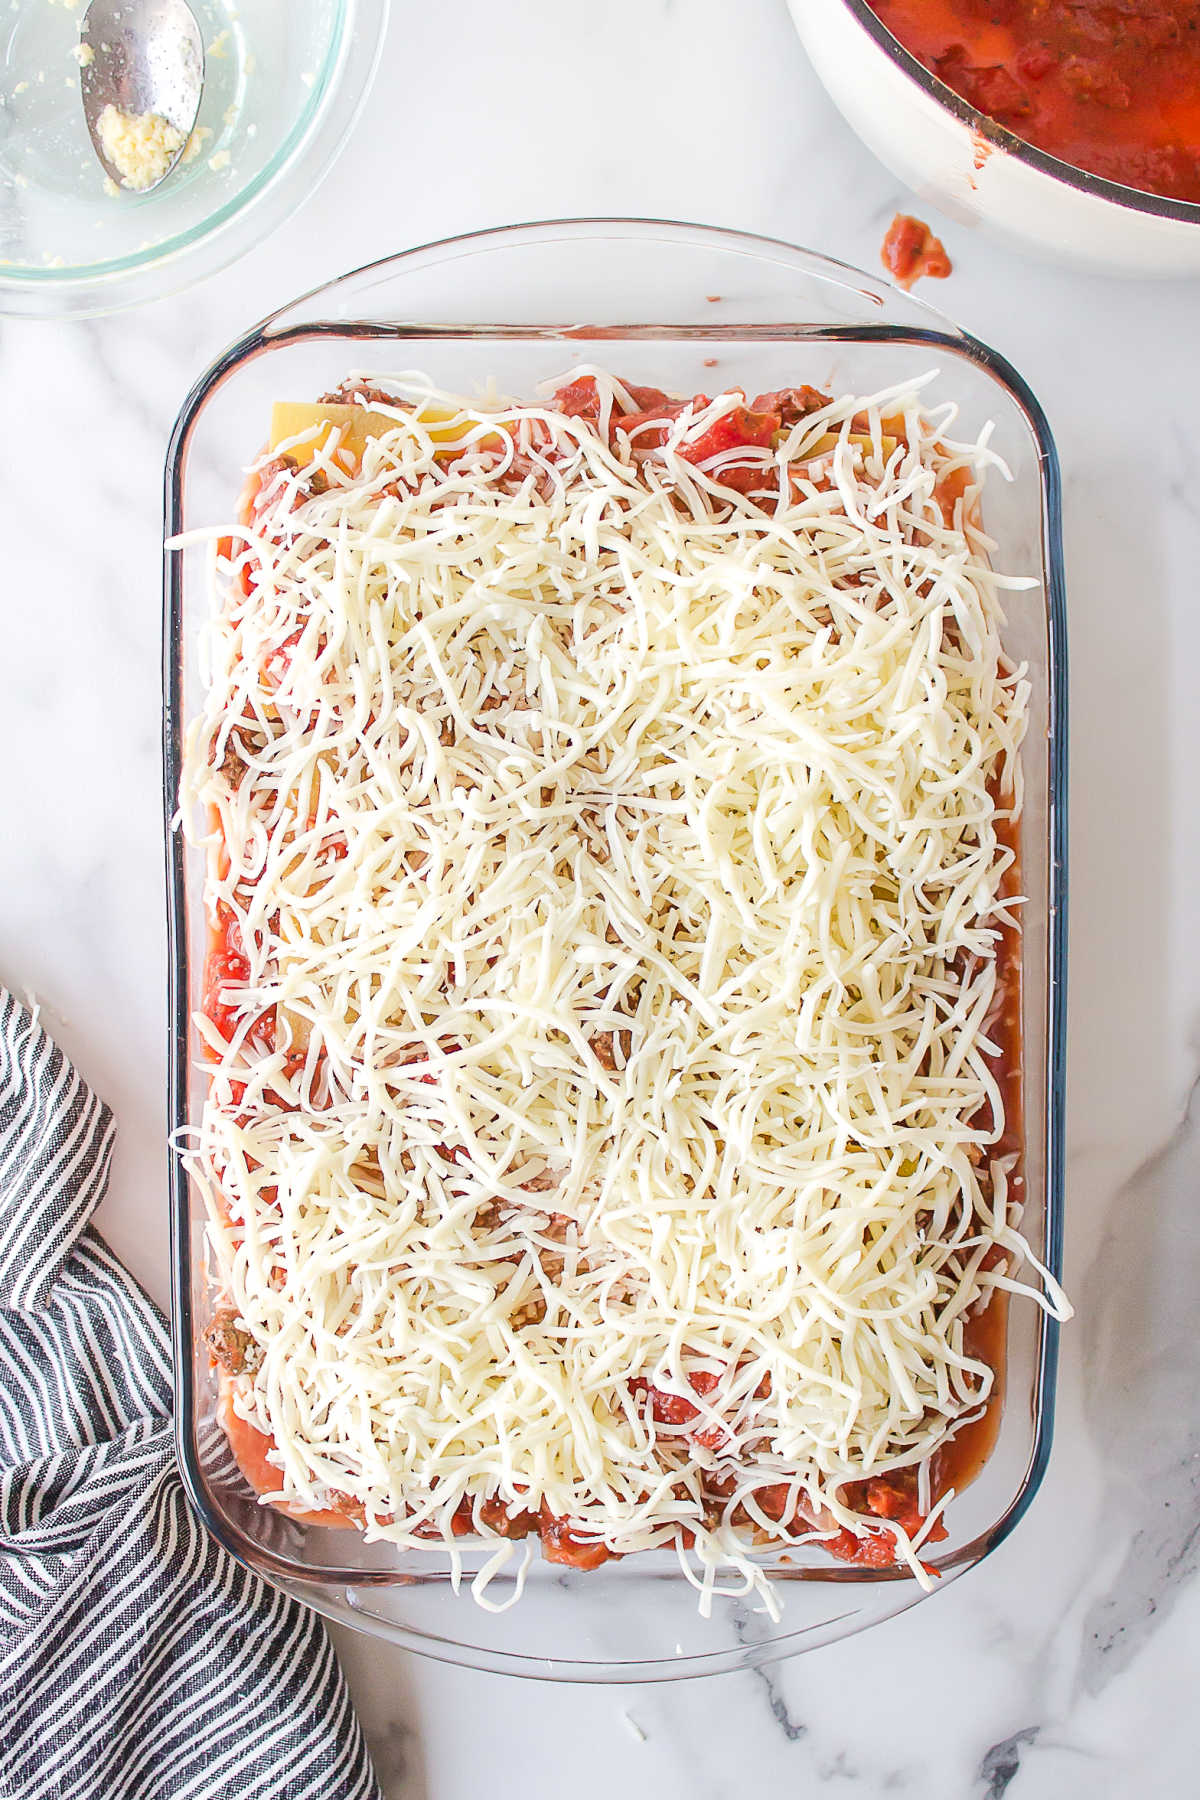 Unbaked freezer lasagna in a pan.